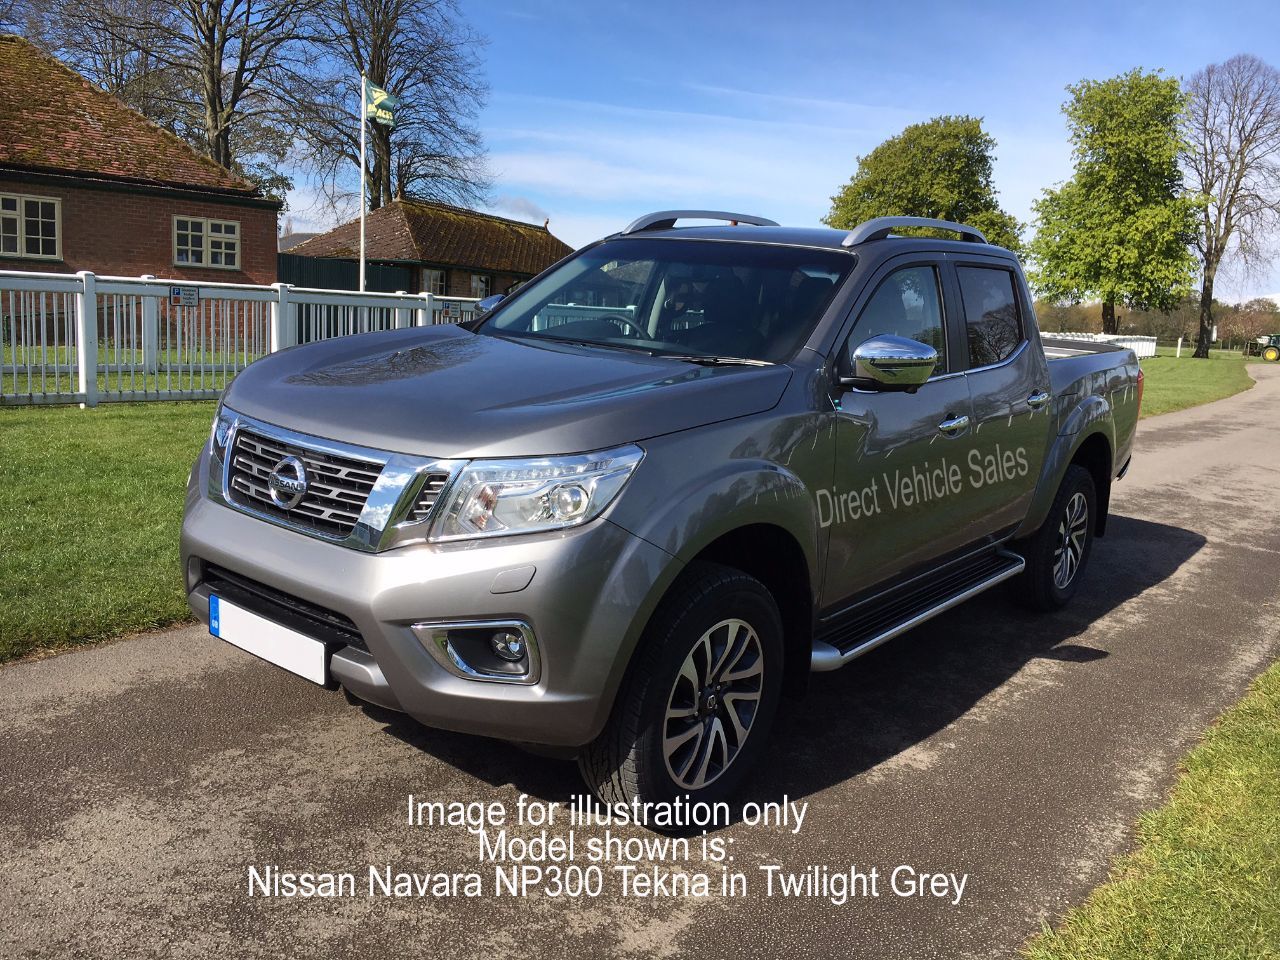 Nissan ripon north yorkshire #2